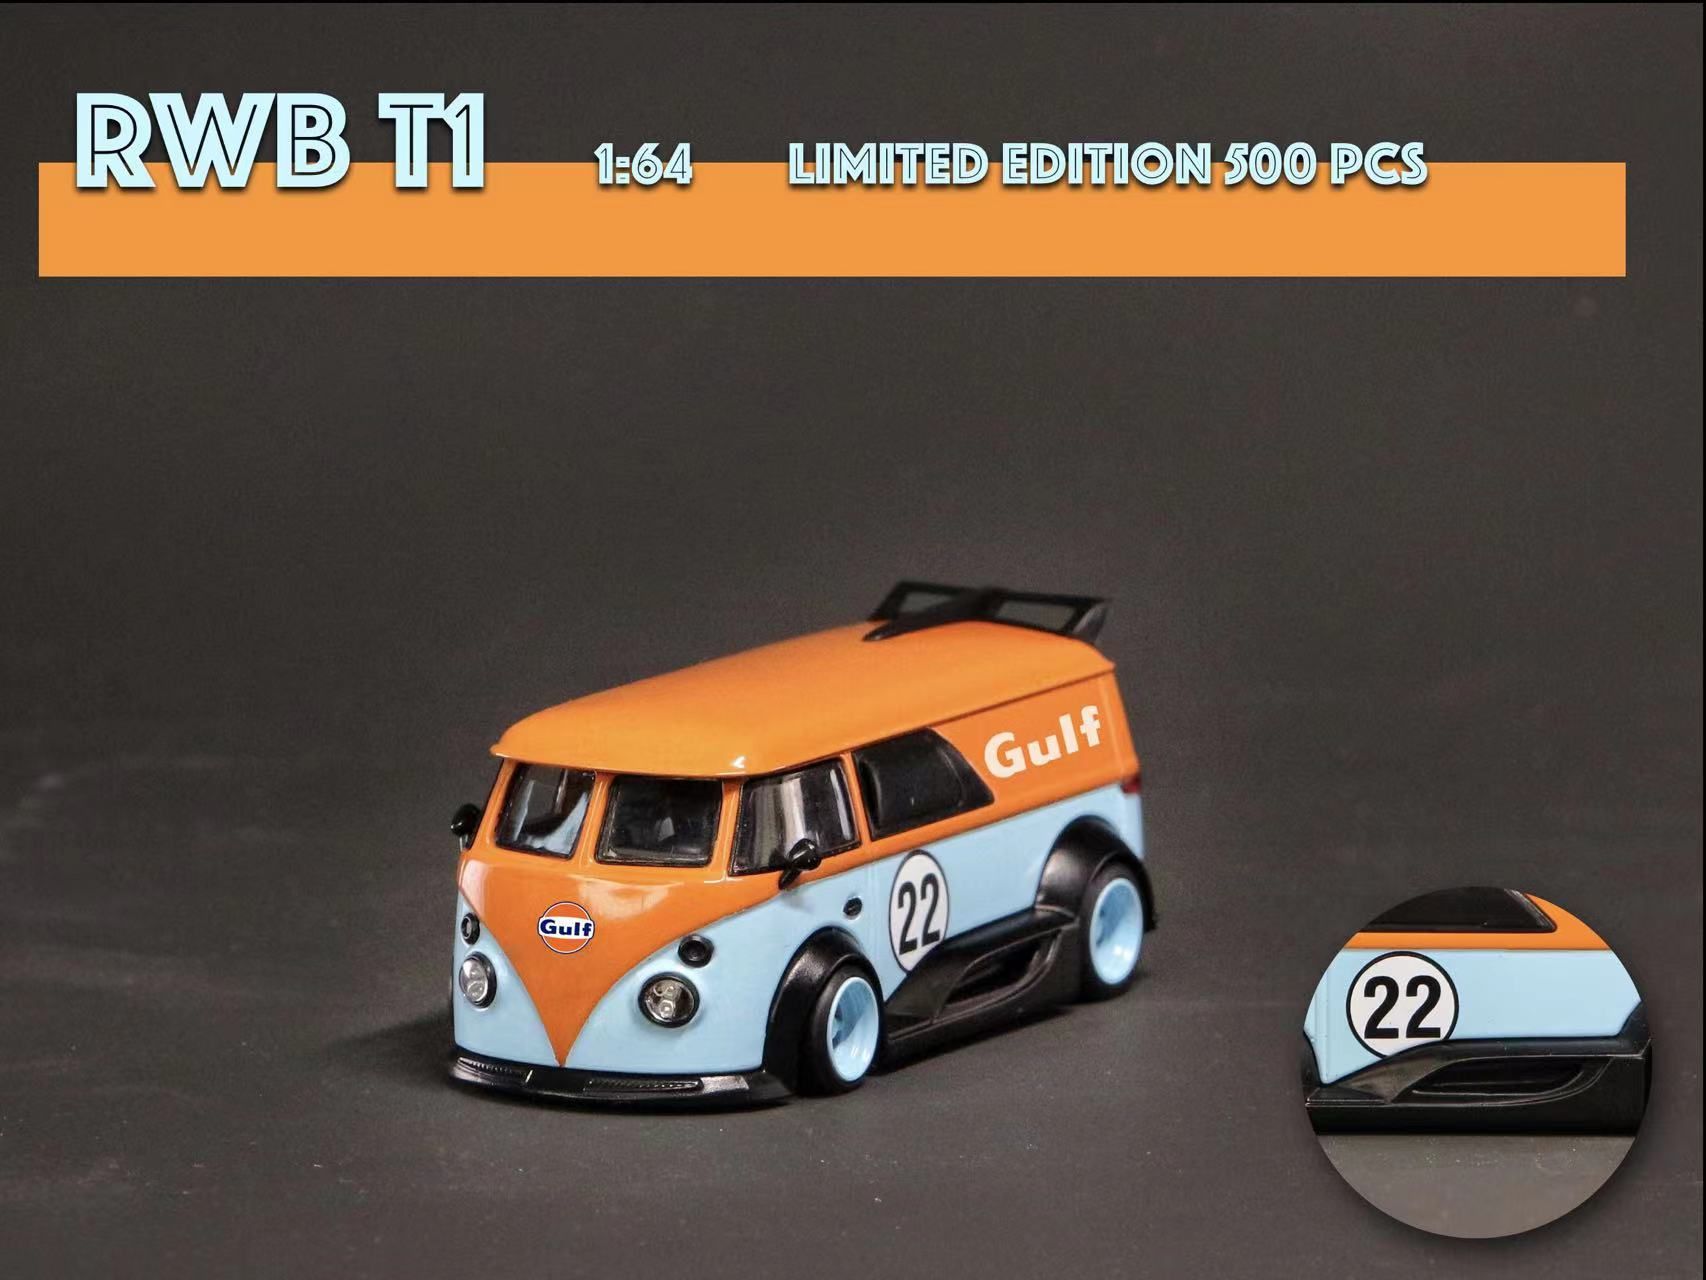  Mô hình xe Volkwagen RWB T1 Van Gulf #22 limited 499 tỉ lệ 1:64 Mini&Dream 